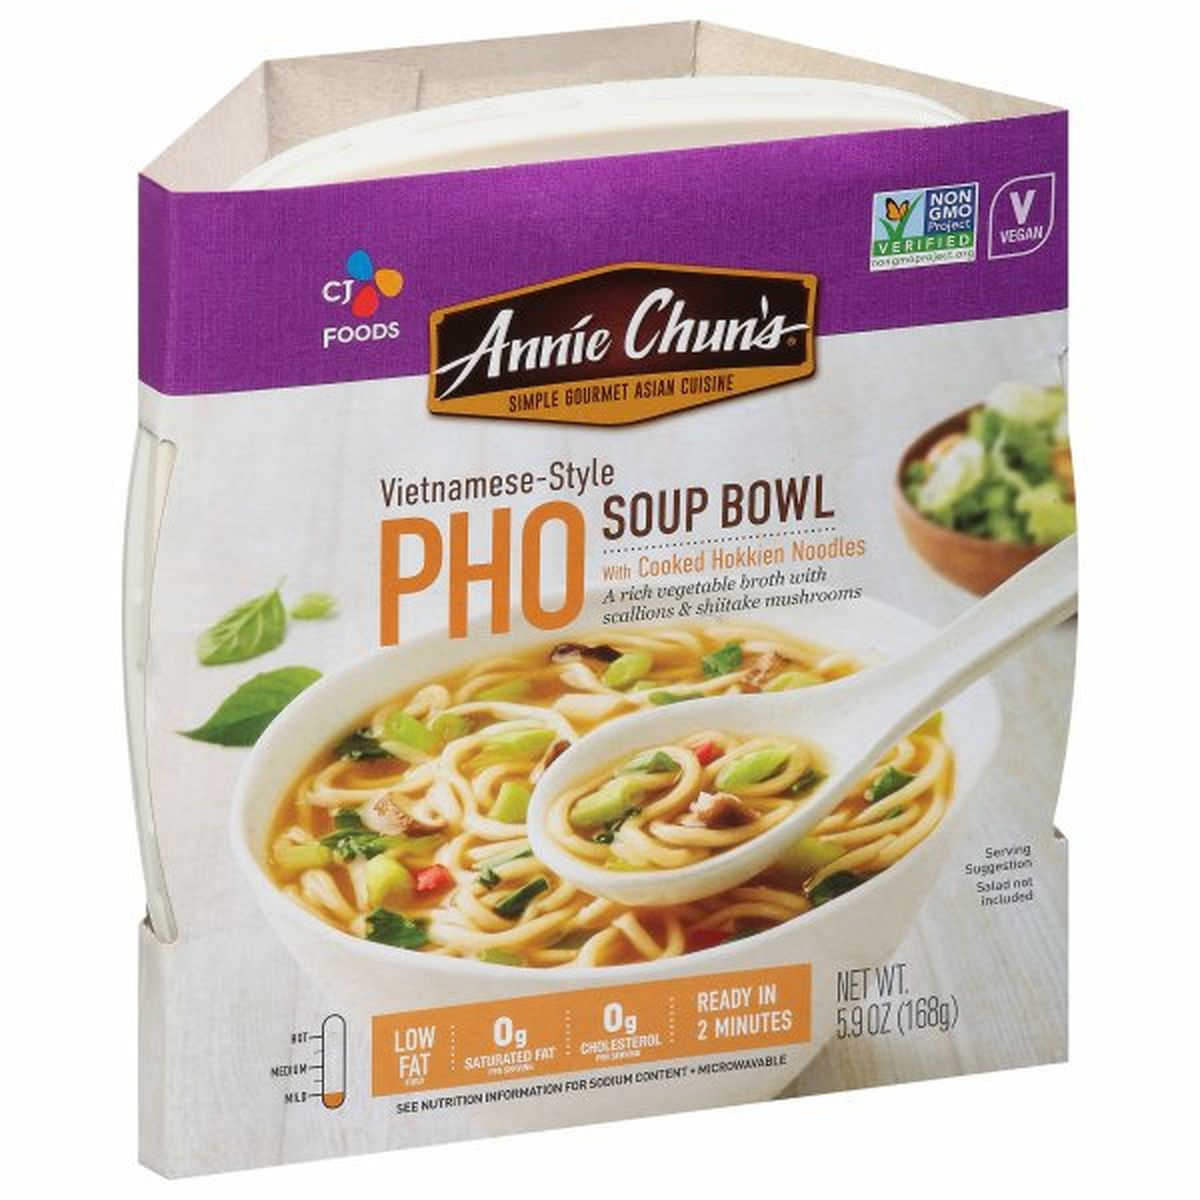 Calories in Annie Chuns Soup Bowl, PHO, Vietnamese-Style, Mild